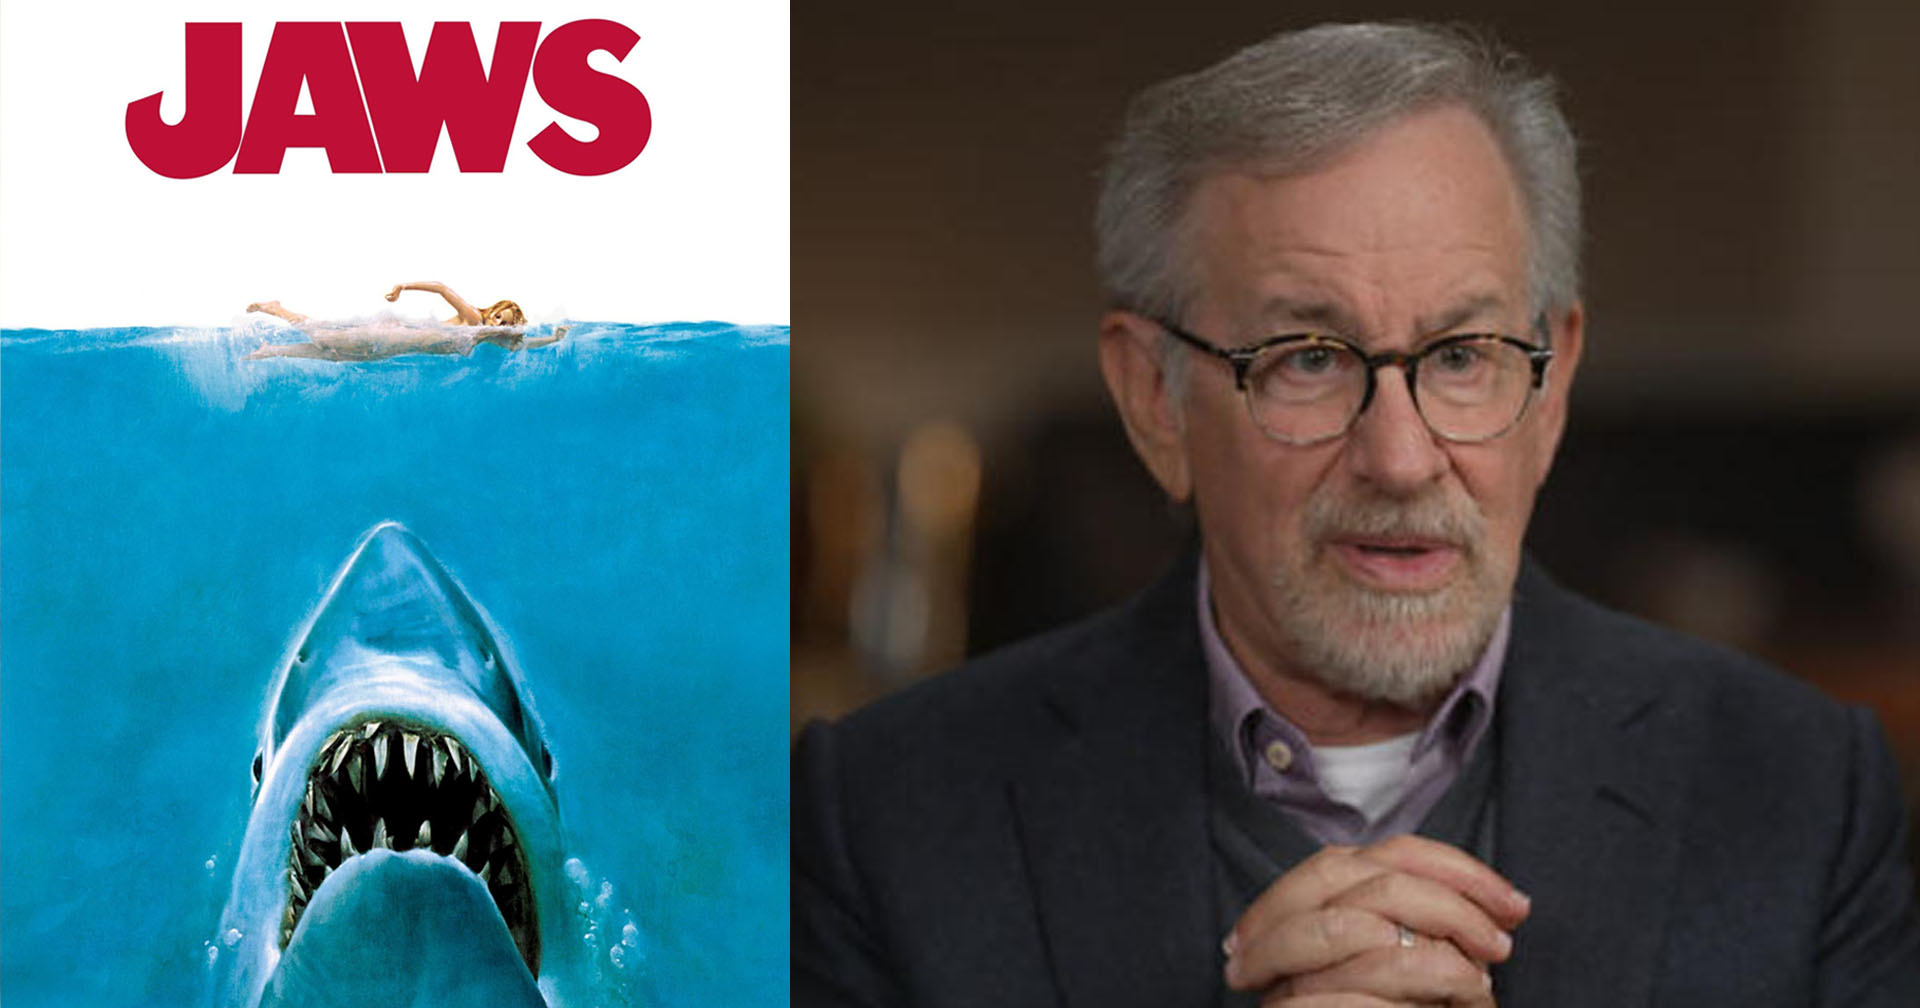 Steven Spielberg เผย เสียใจที่ ‘Jaws’ เป็นต้นเหตุ ให้ฉลามตายเยอะขึ้น